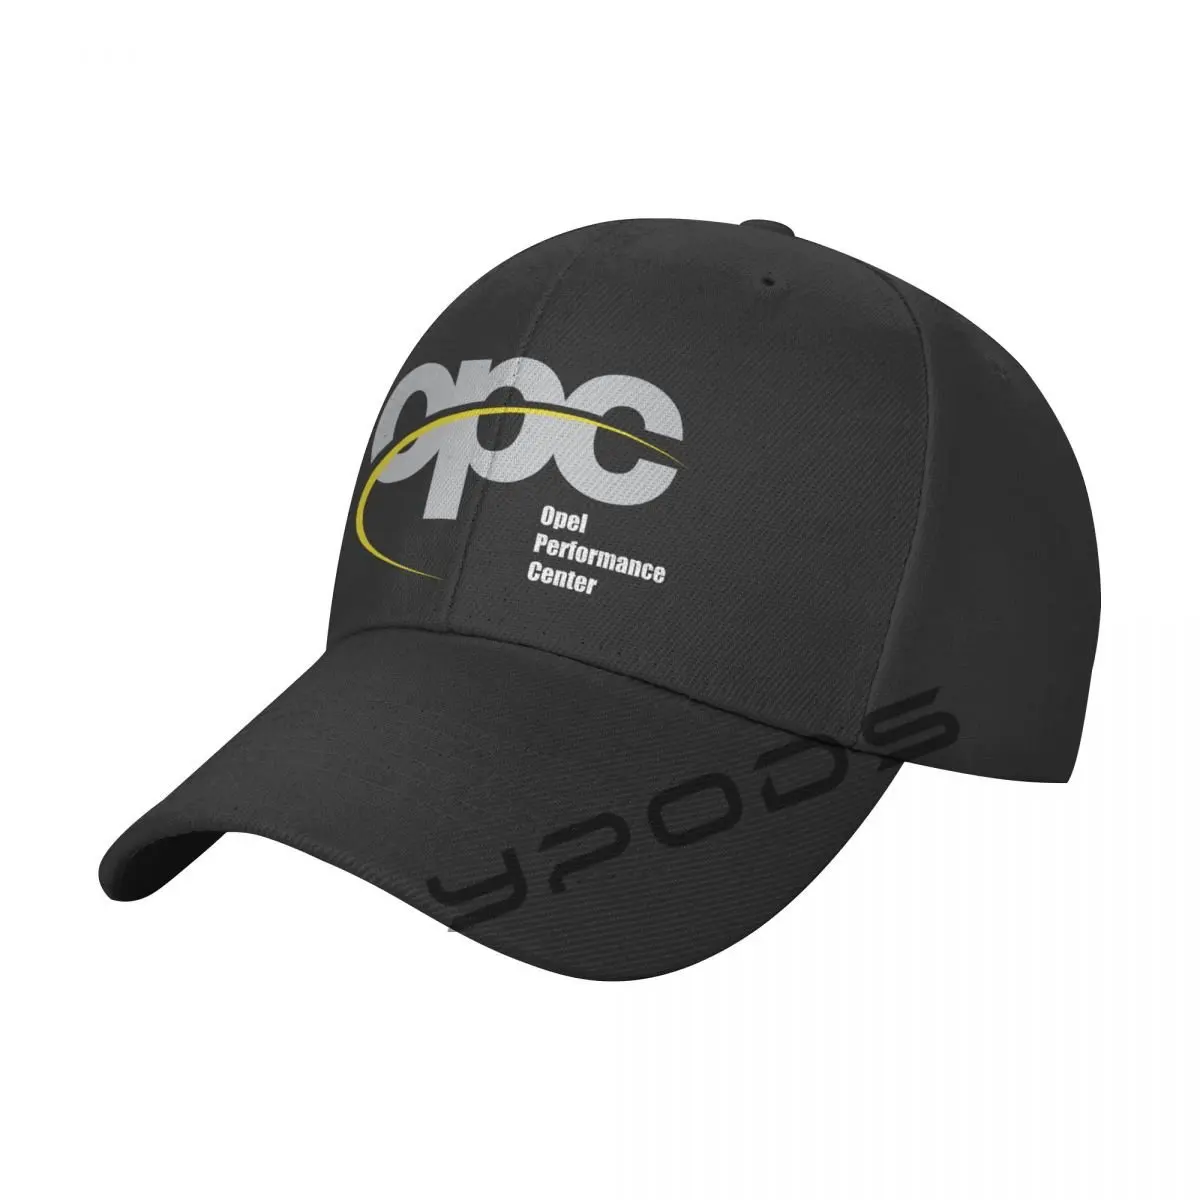 

OPC PERFORMANCE CENTER OPEL MOTORSPORT Baseball Cap Solid Color Fashion Adjustable Leisure Caps Men Women Hats Caps